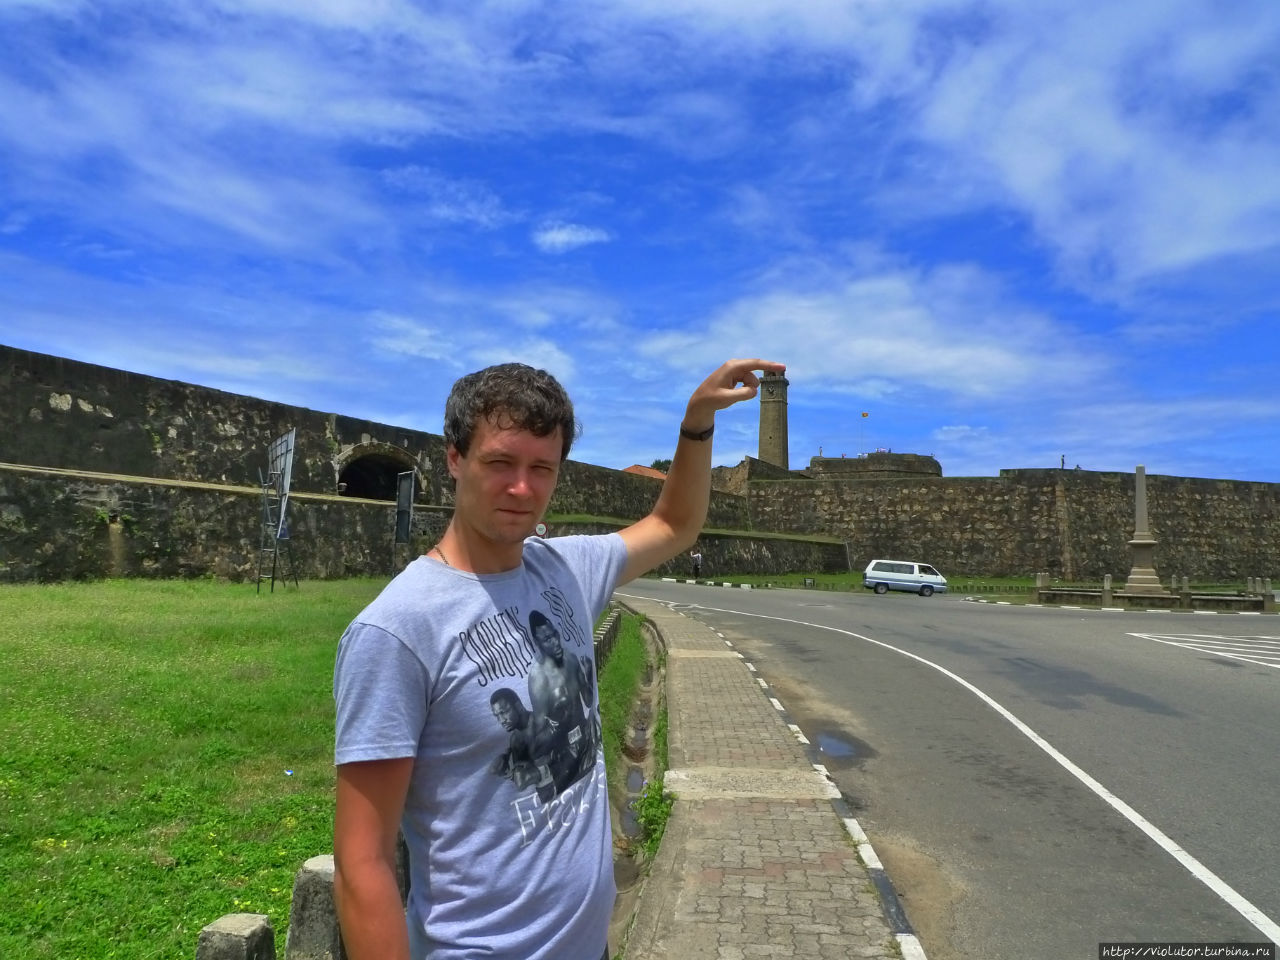 Форт Галле, солнце и очарование построек 17-го века Галле, Шри-Ланка